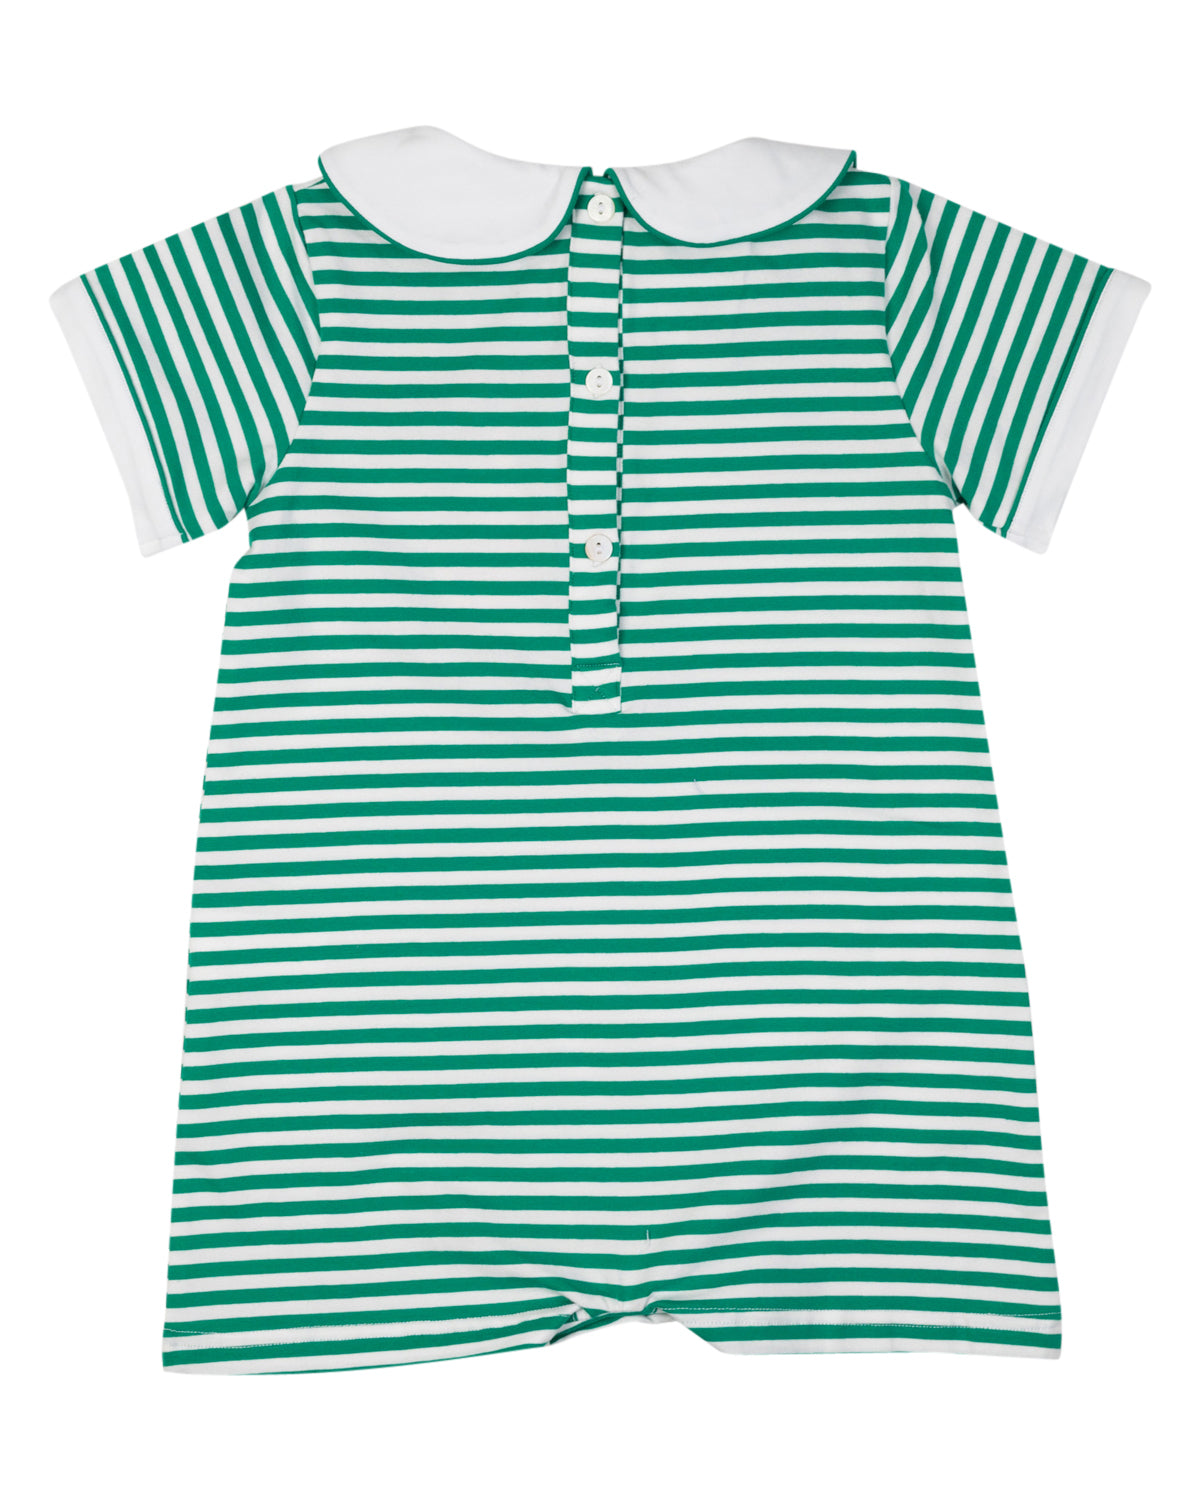 Green Striped Knit Shortall